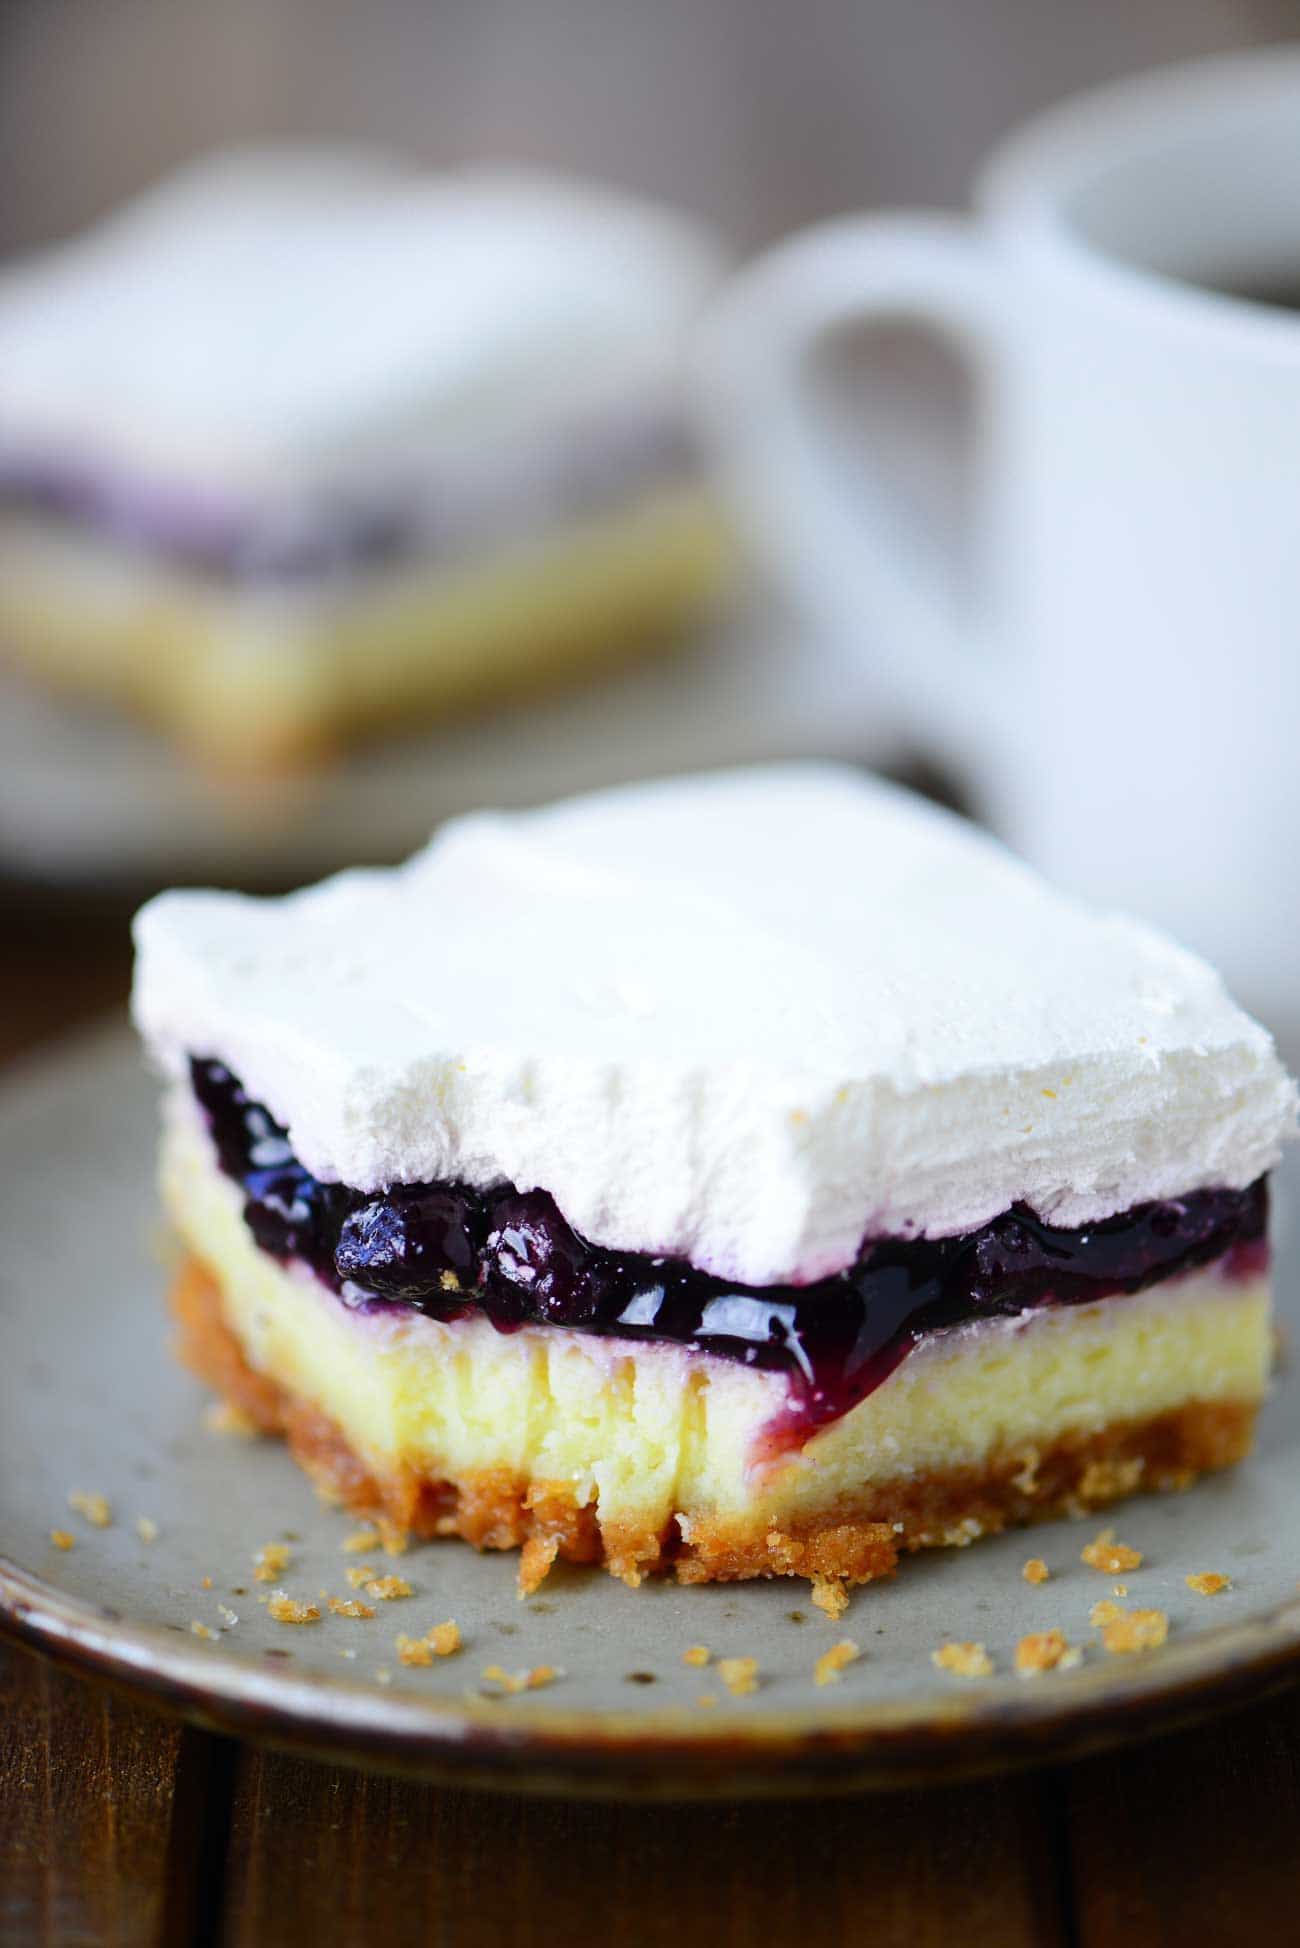 Blueberry Cheesecake Dessert Slice On Blue Plate